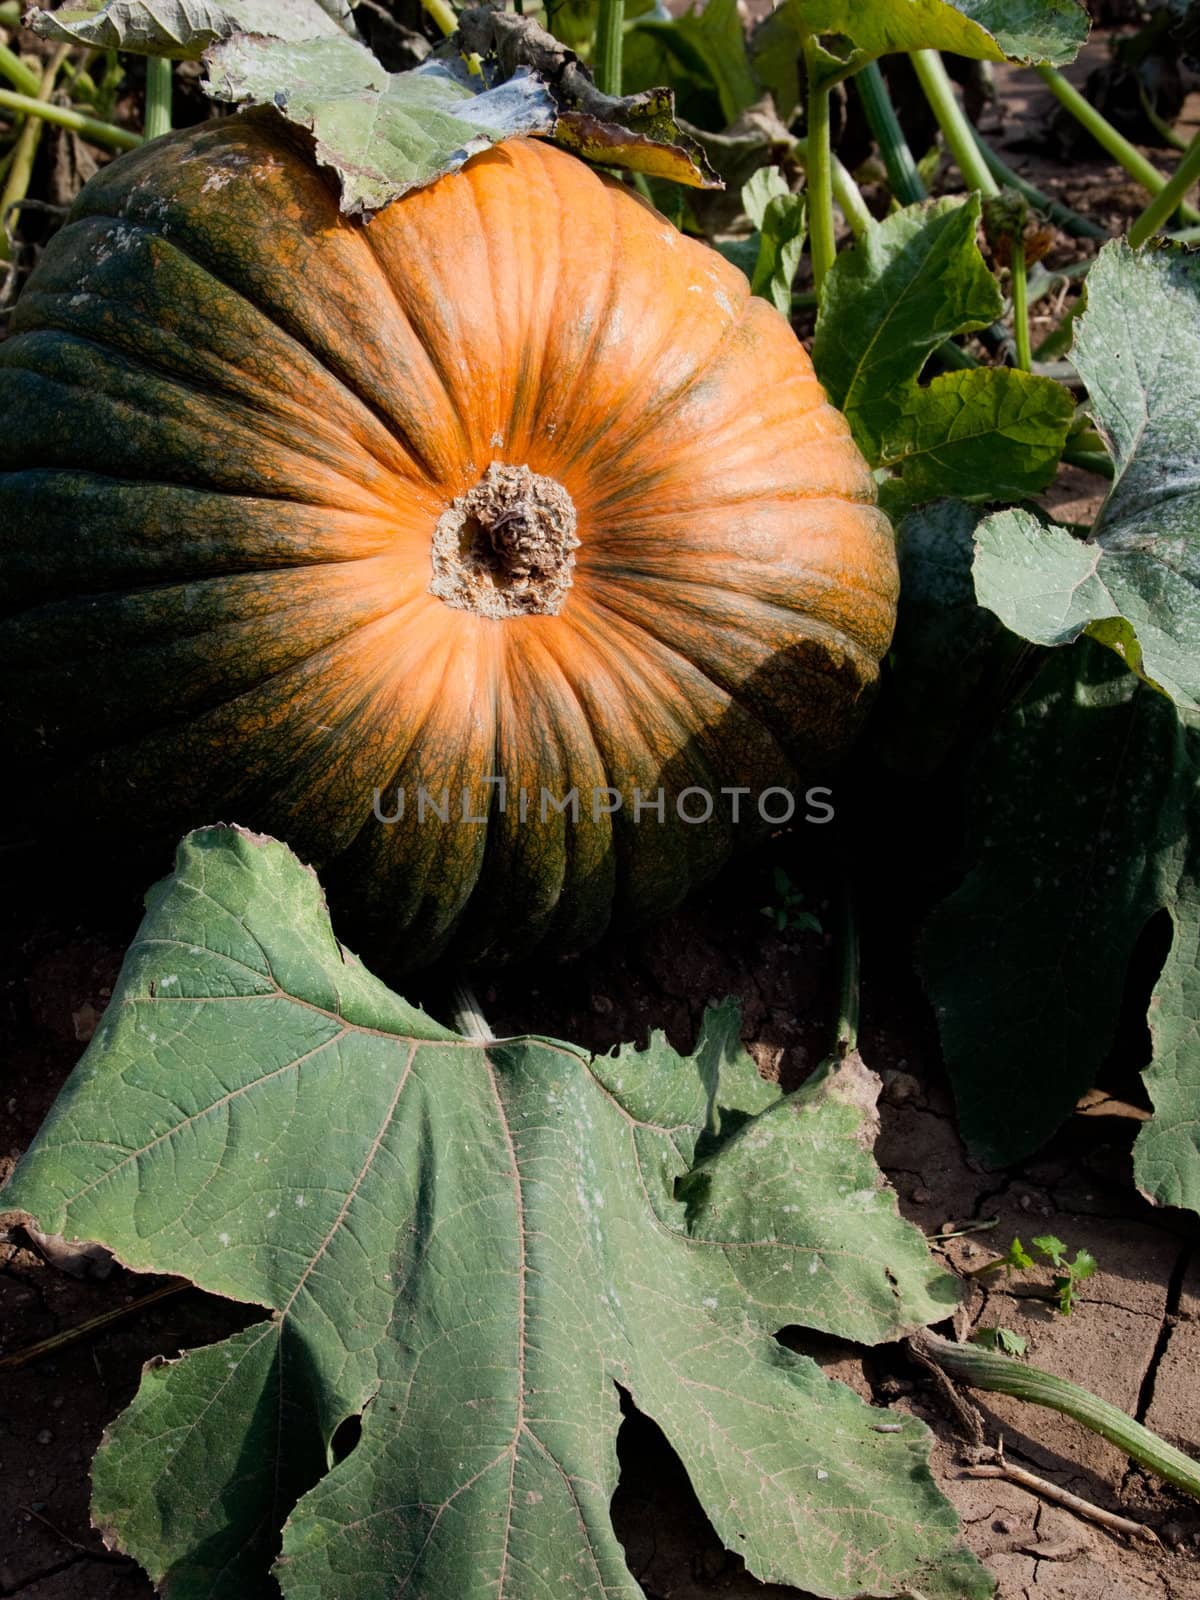 Organic Pumpkin by chaosmediamgt